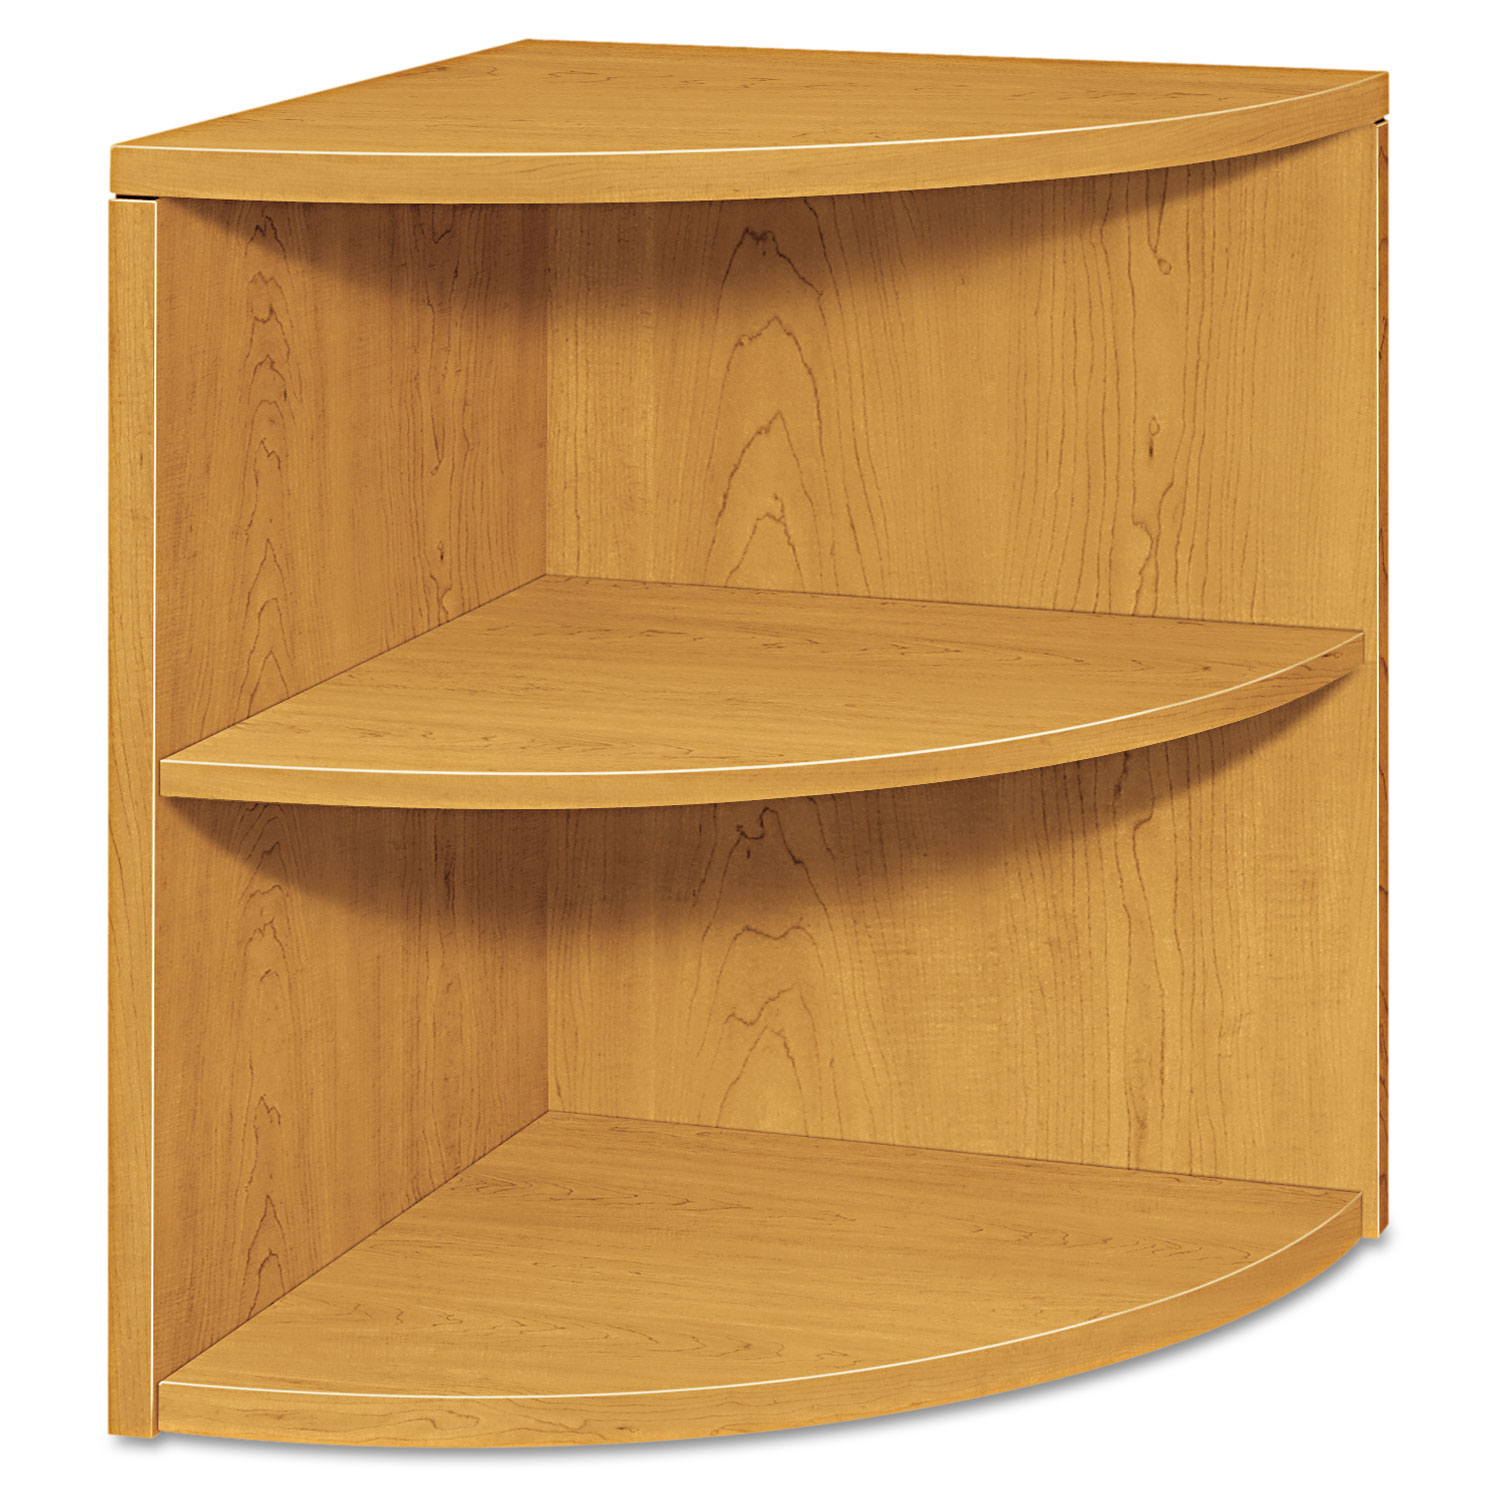 10500 Series Two-Shelf End Cap Bookshelf, 24w x 24d x 29-1/2h, Harvest